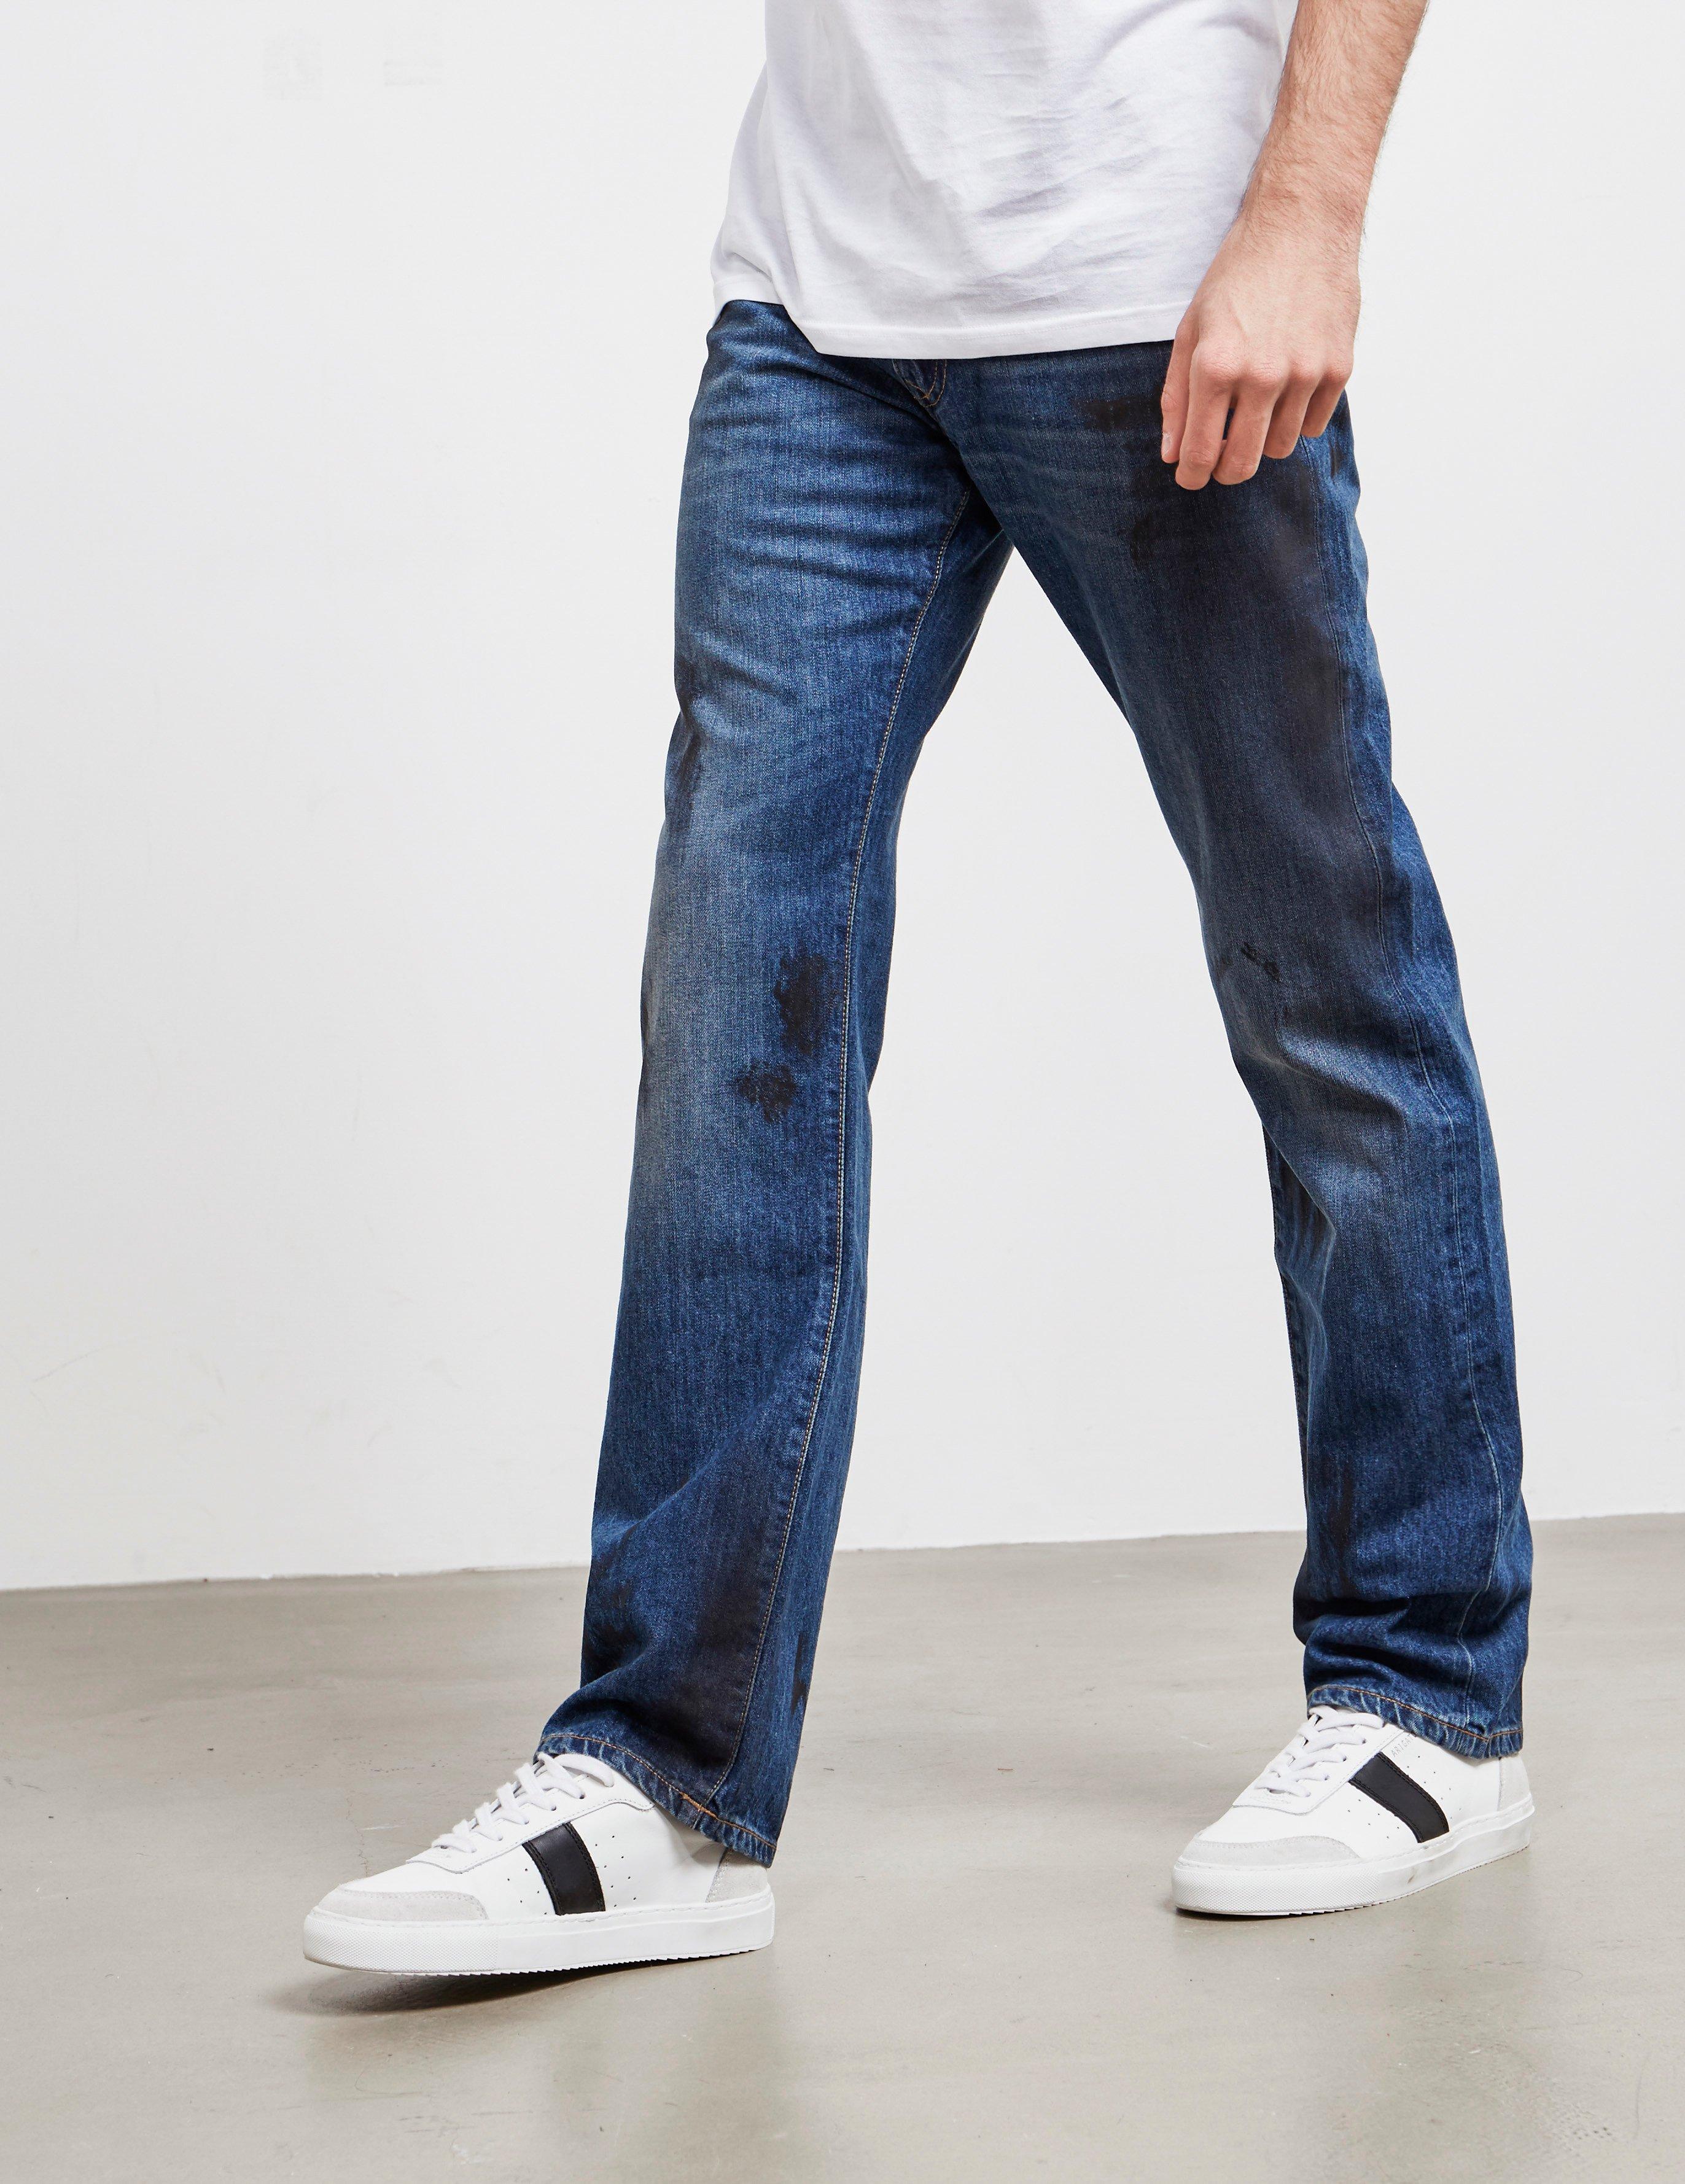 vivienne westwood jeans mens